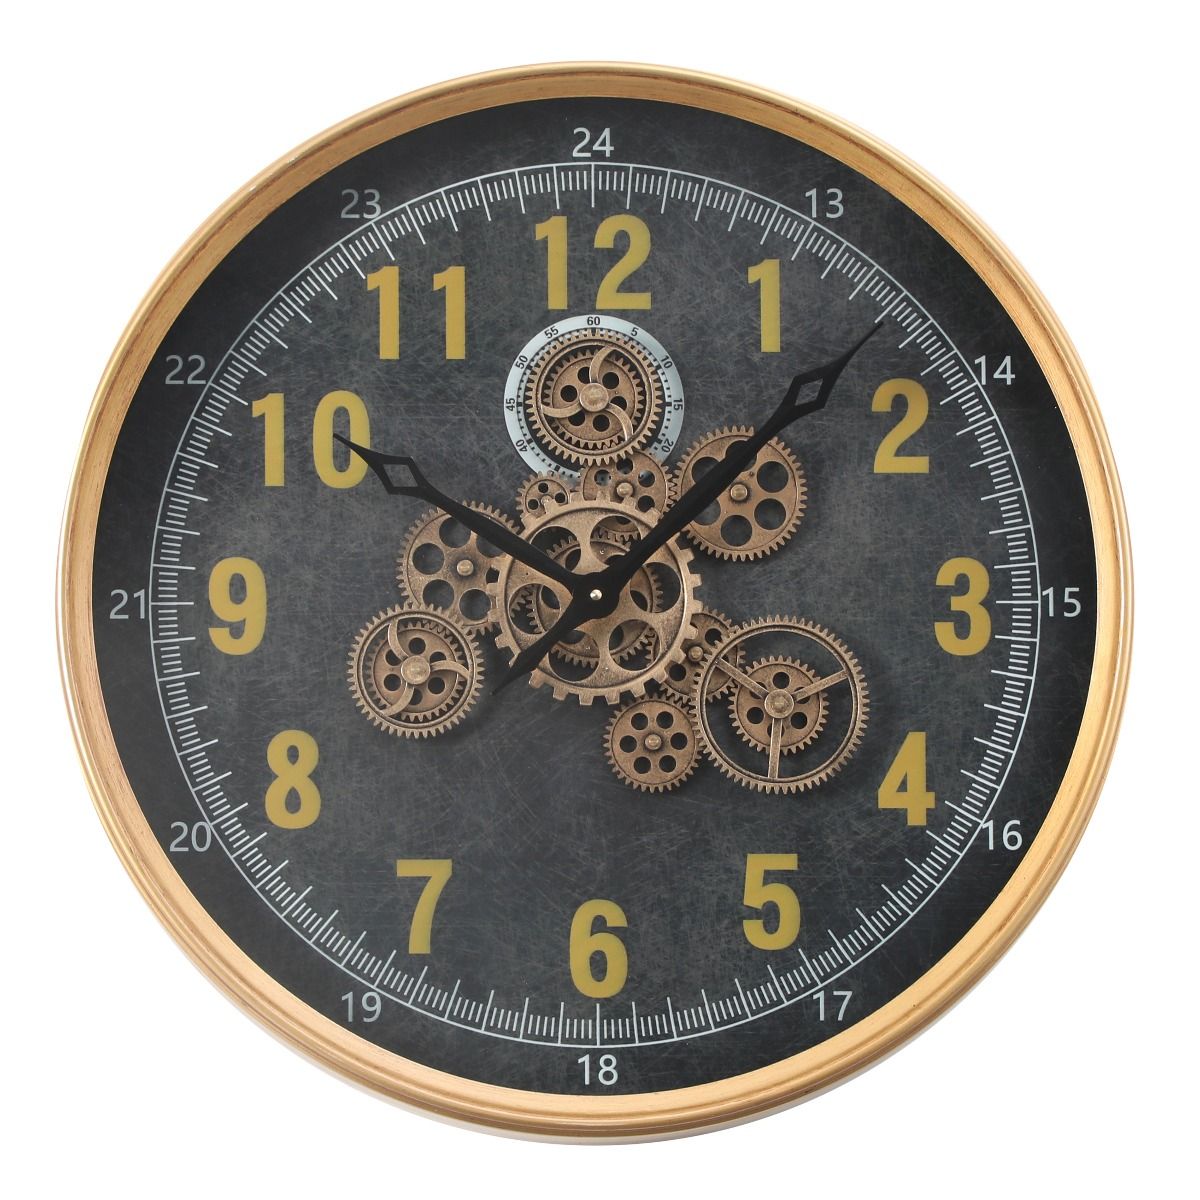 Industrial/vintage-inspired clock range - MODEL 013